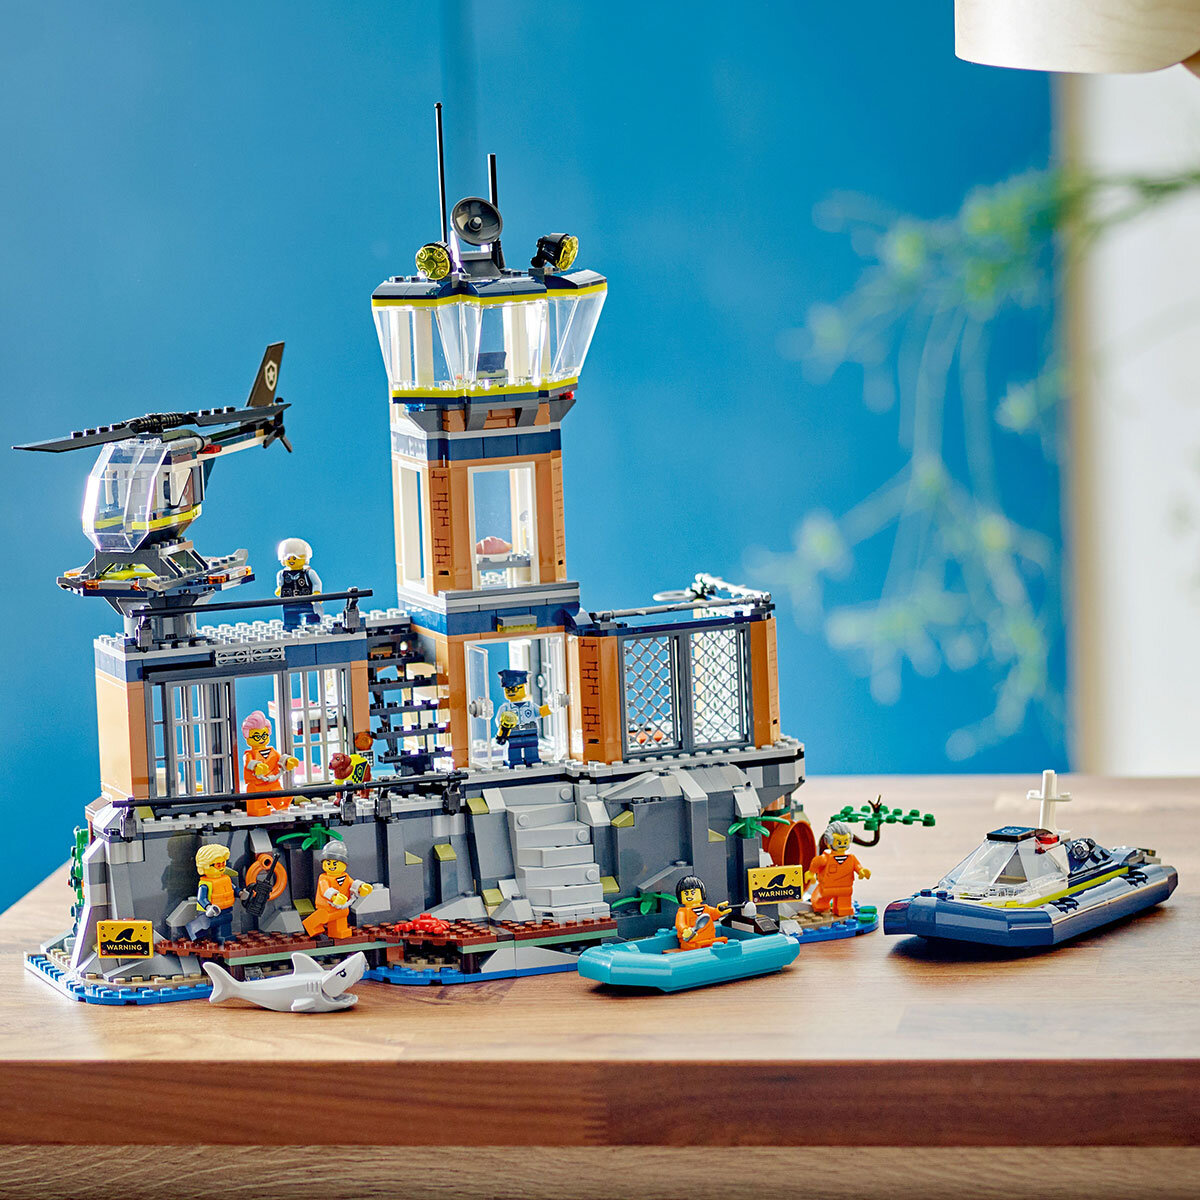 Buy LEGO City Police Prison Island Lifestyle Image at Costco.co.uk